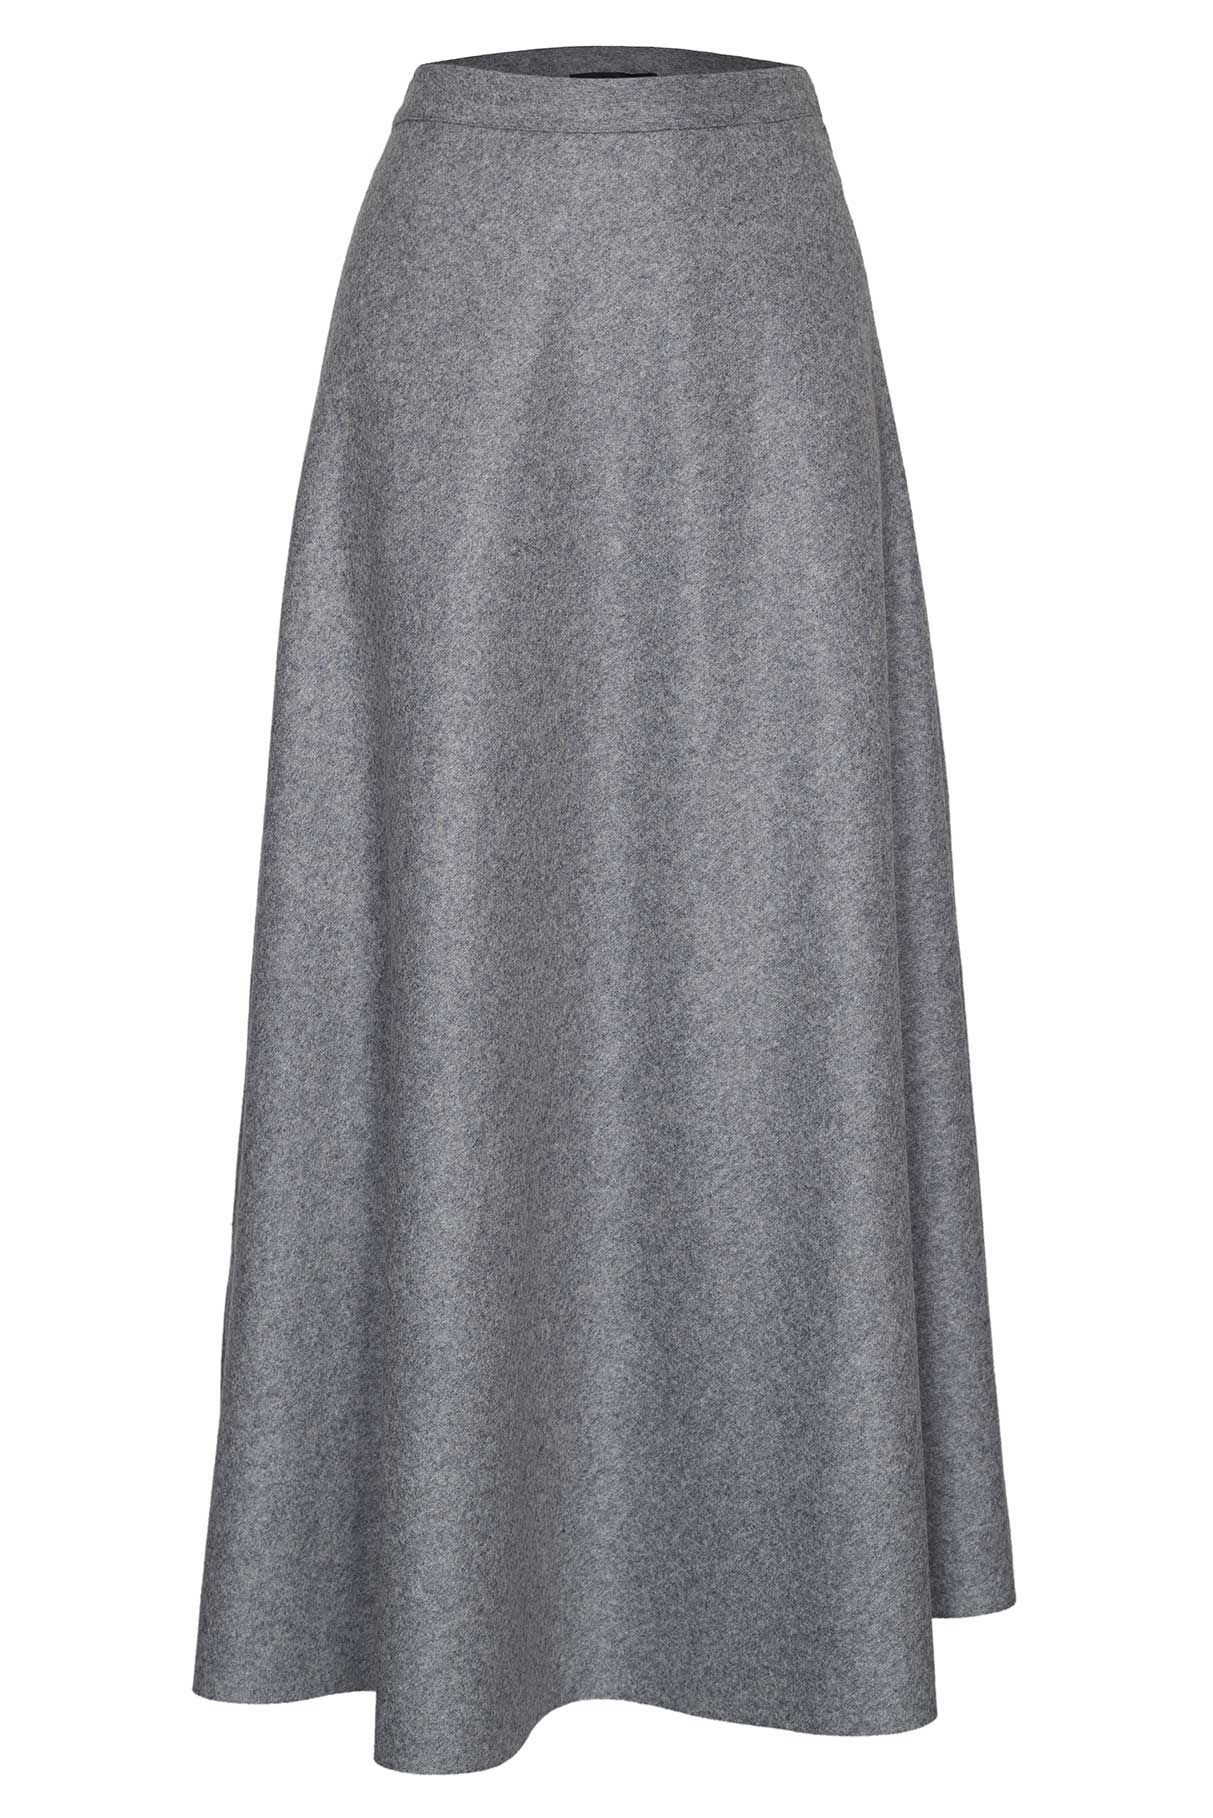 Long Grey Skirt 49